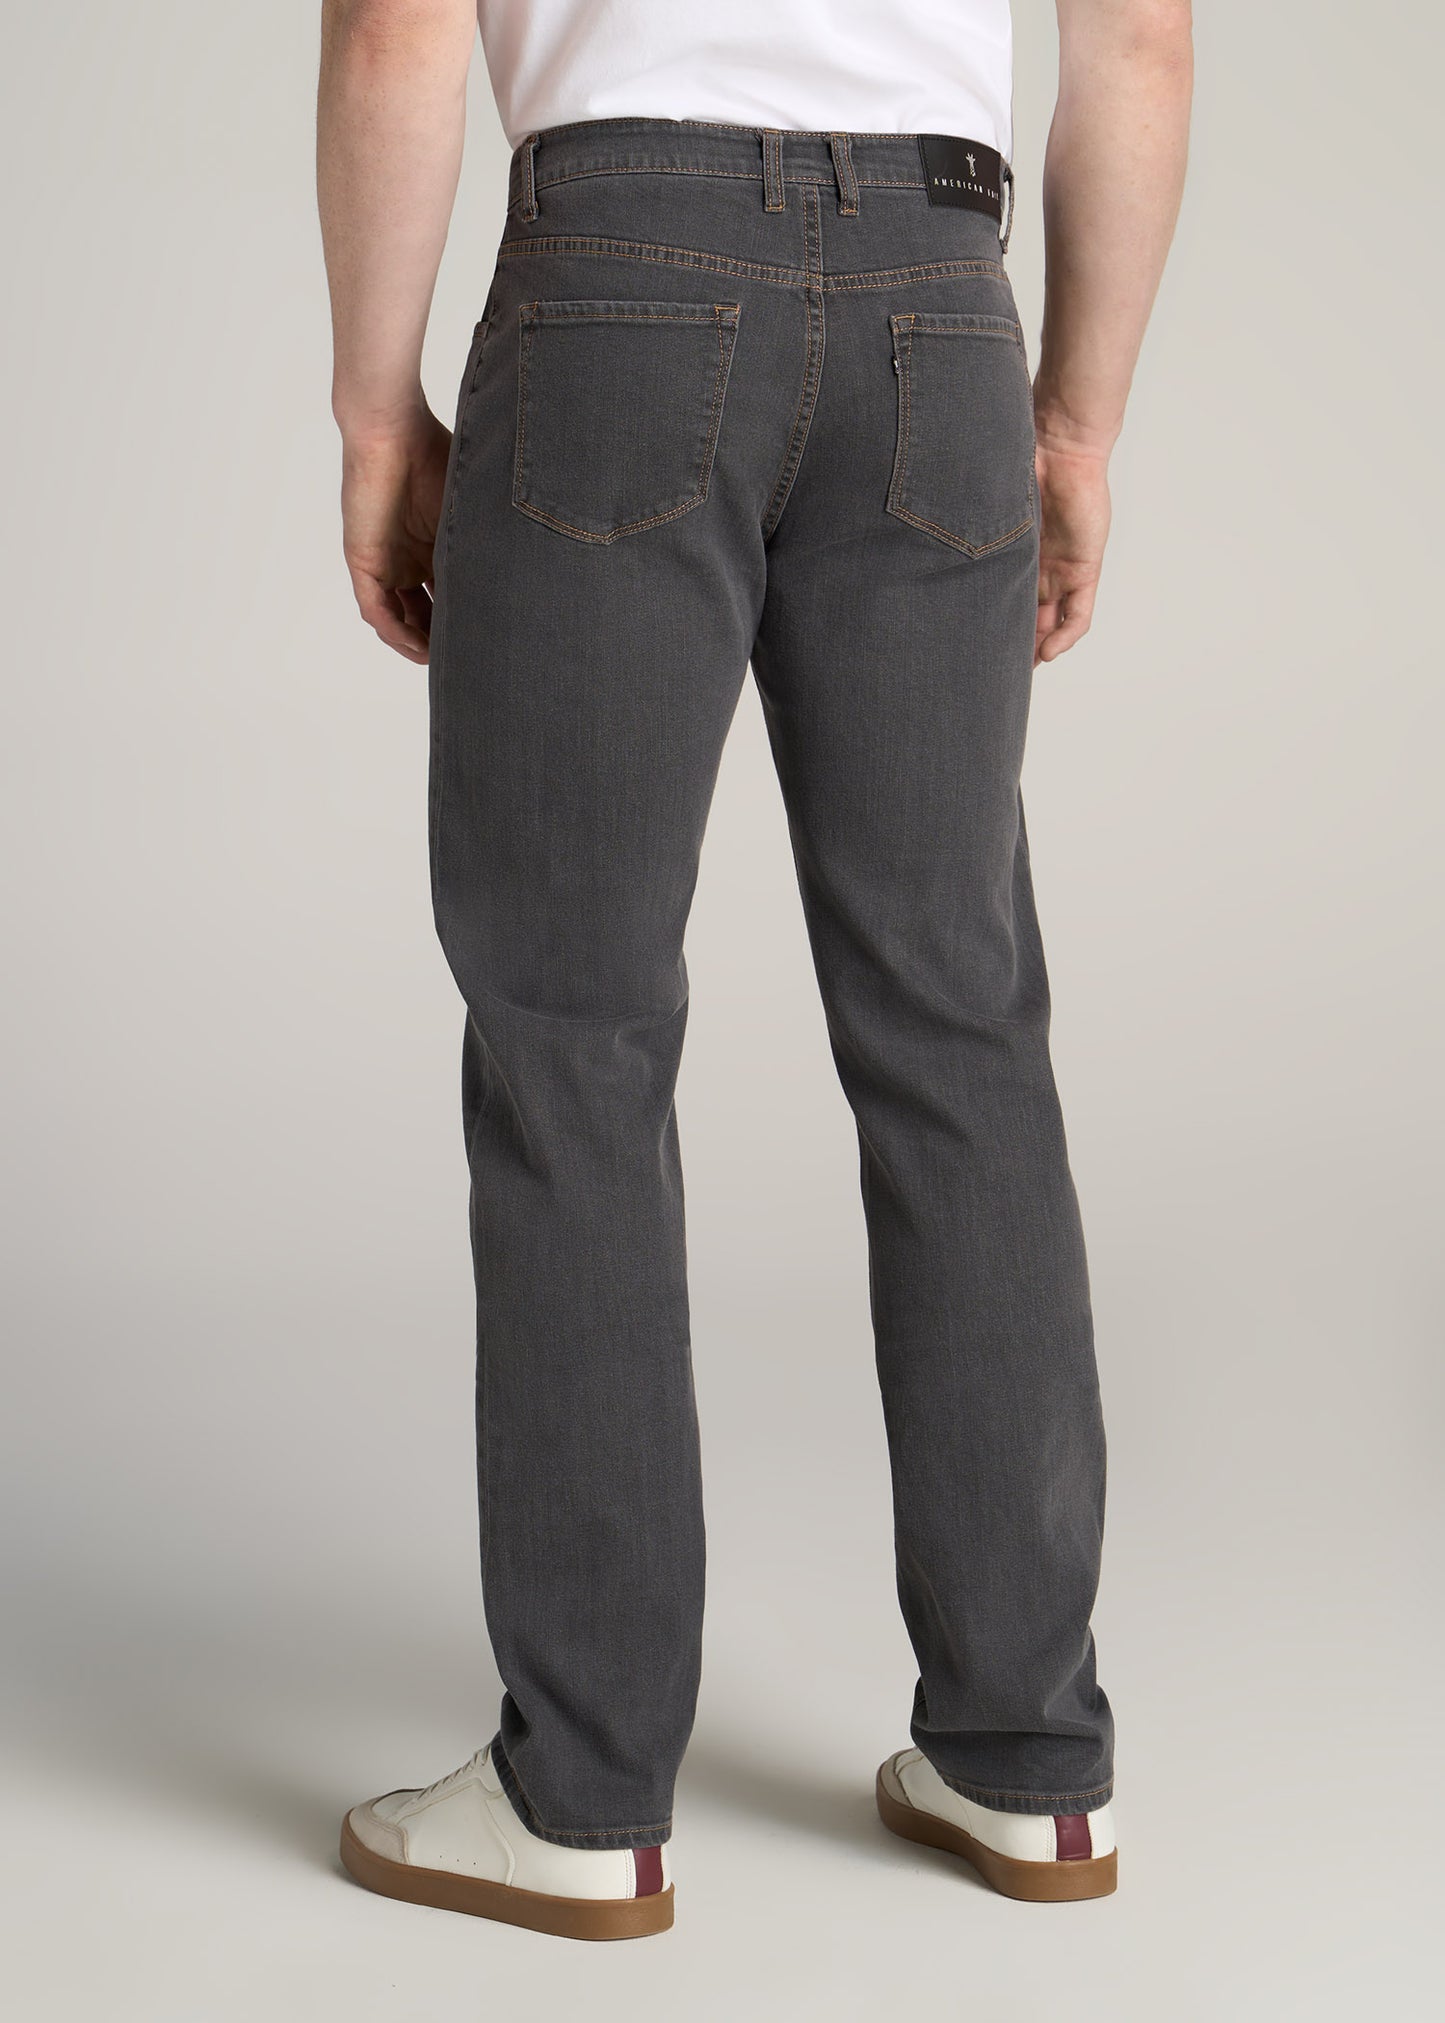 Grey Denim J1 Straight Leg Tall Men's Jeans